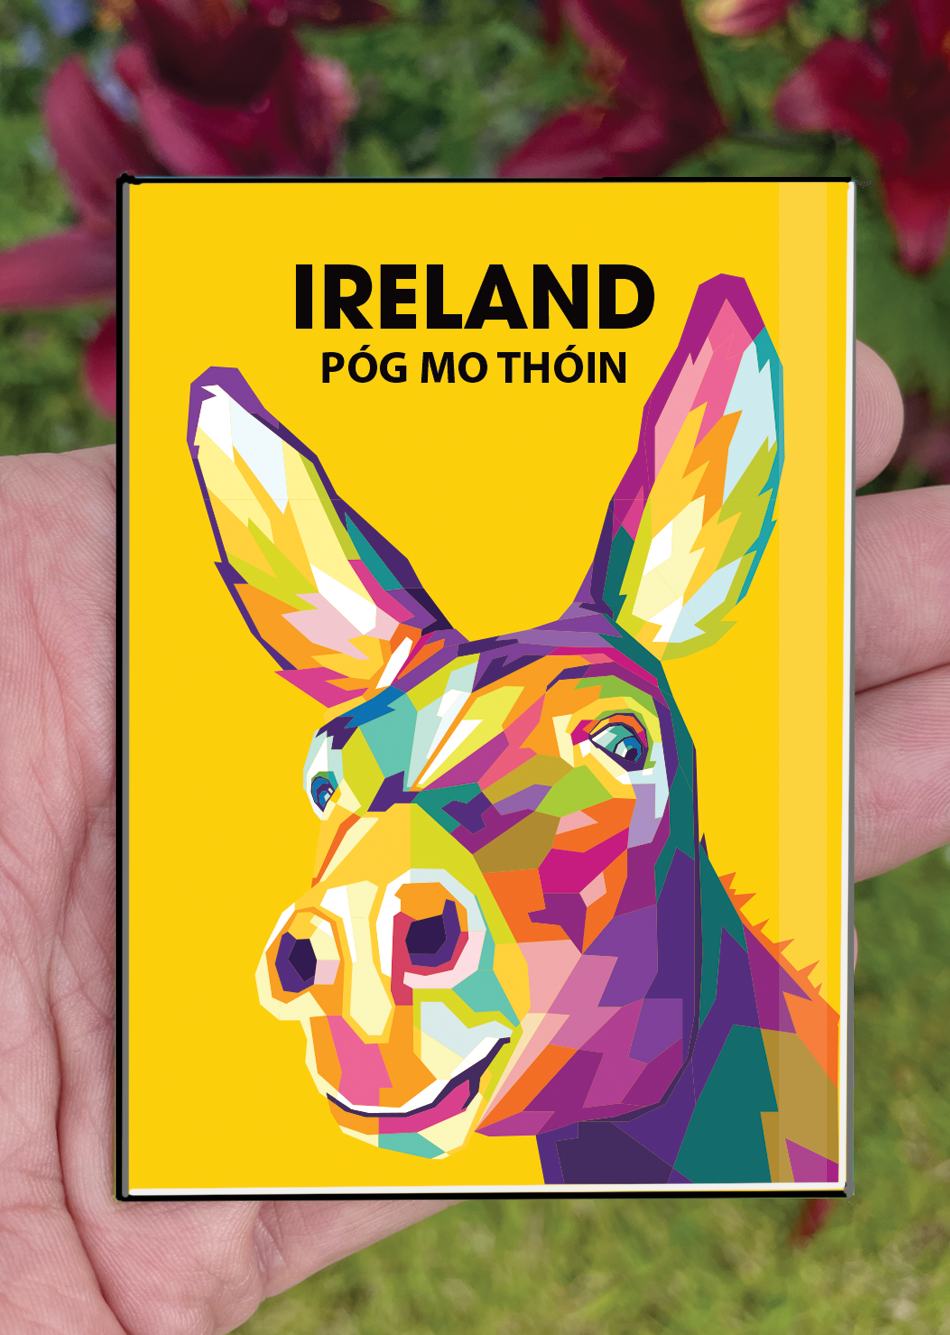 Ireland Postcard or A4 Mounted Print or Fridge Magnet - Pog mo thoin